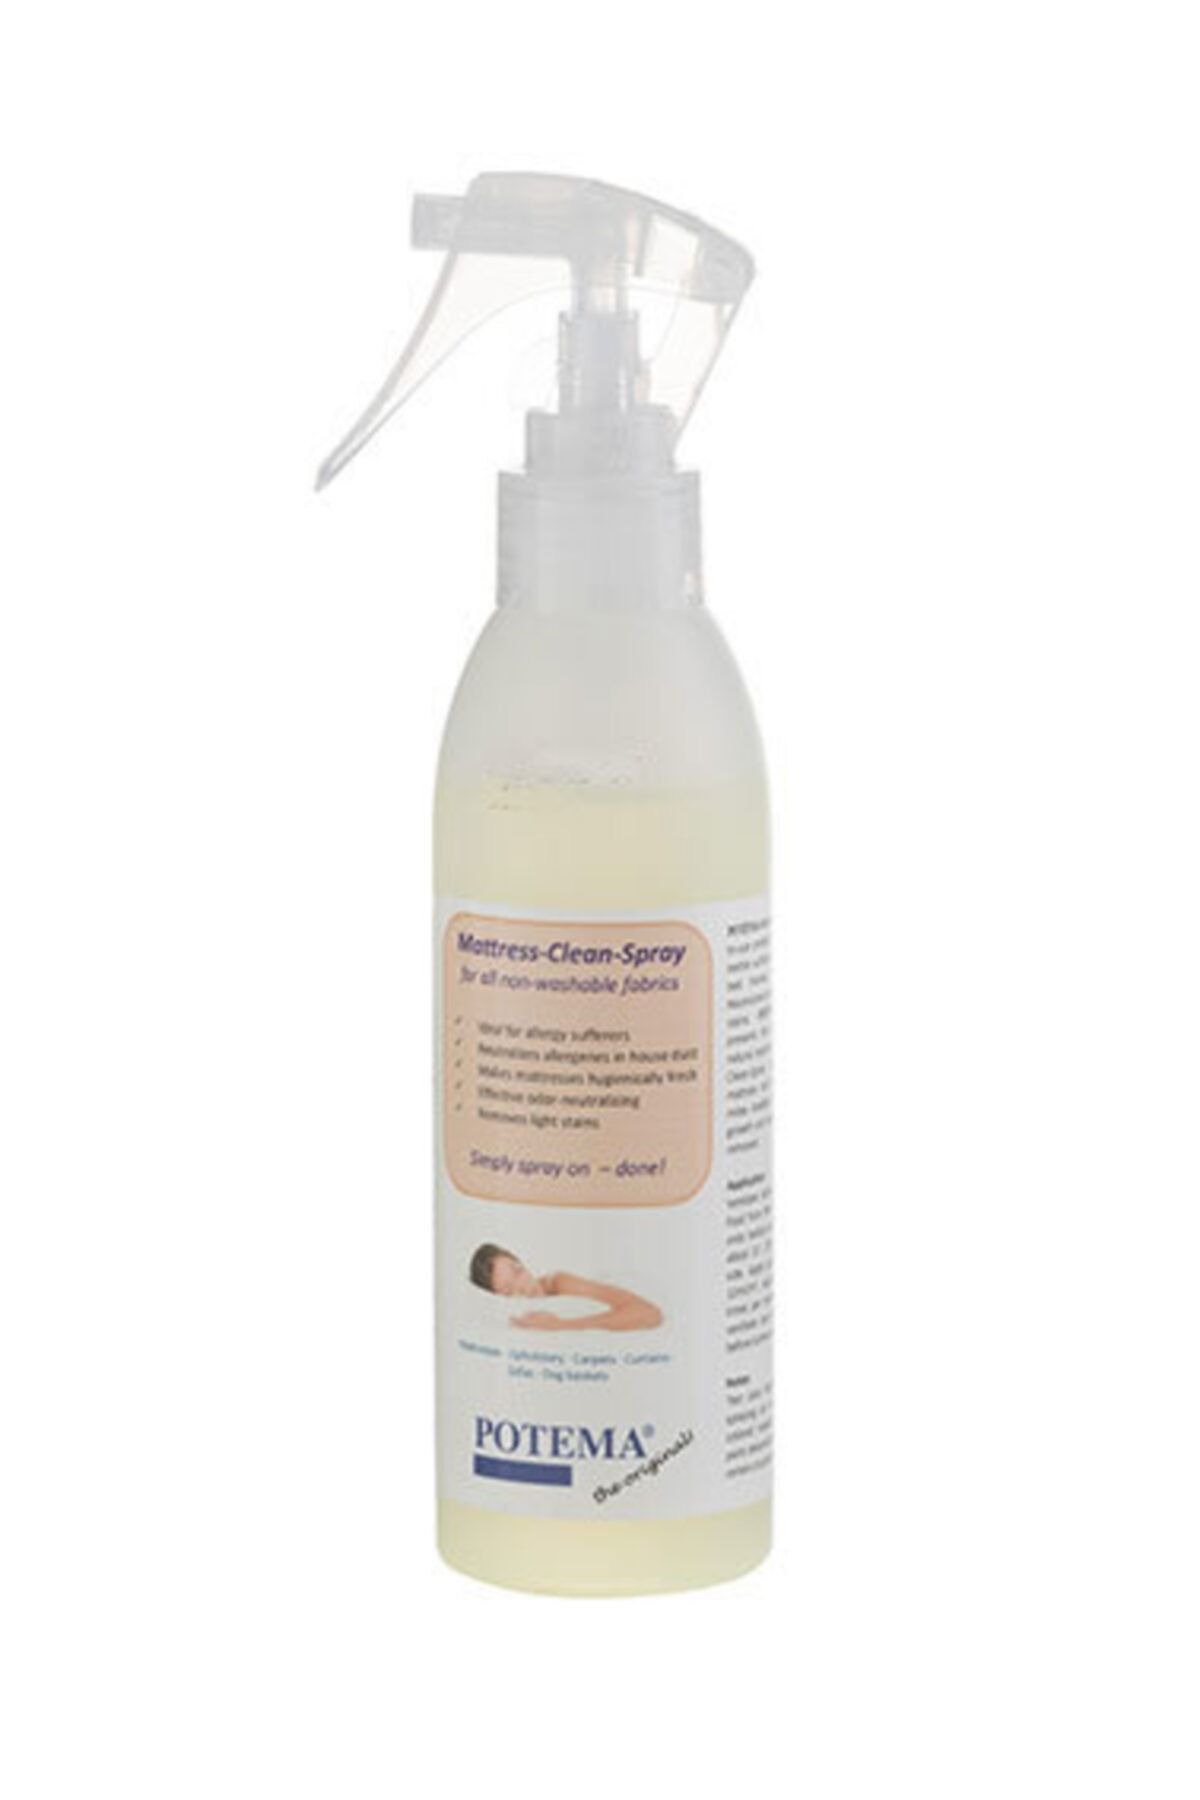 POTEMA Anti Mite Spray Mattress-clean- Sprey 330 ml.